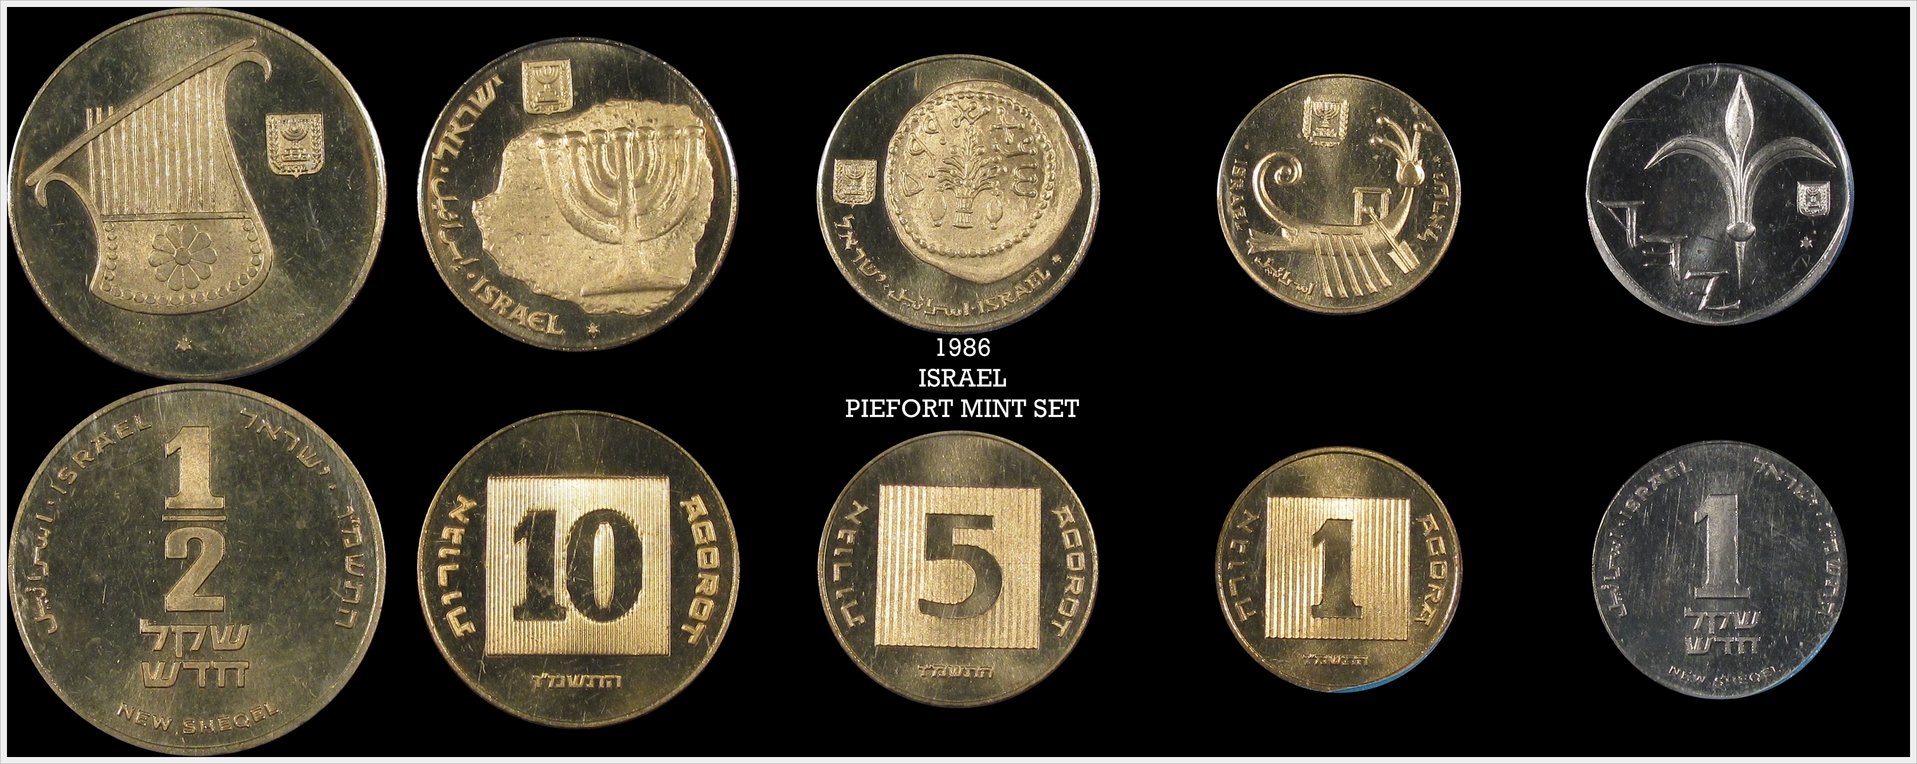 1986 Israel mint set.jpg